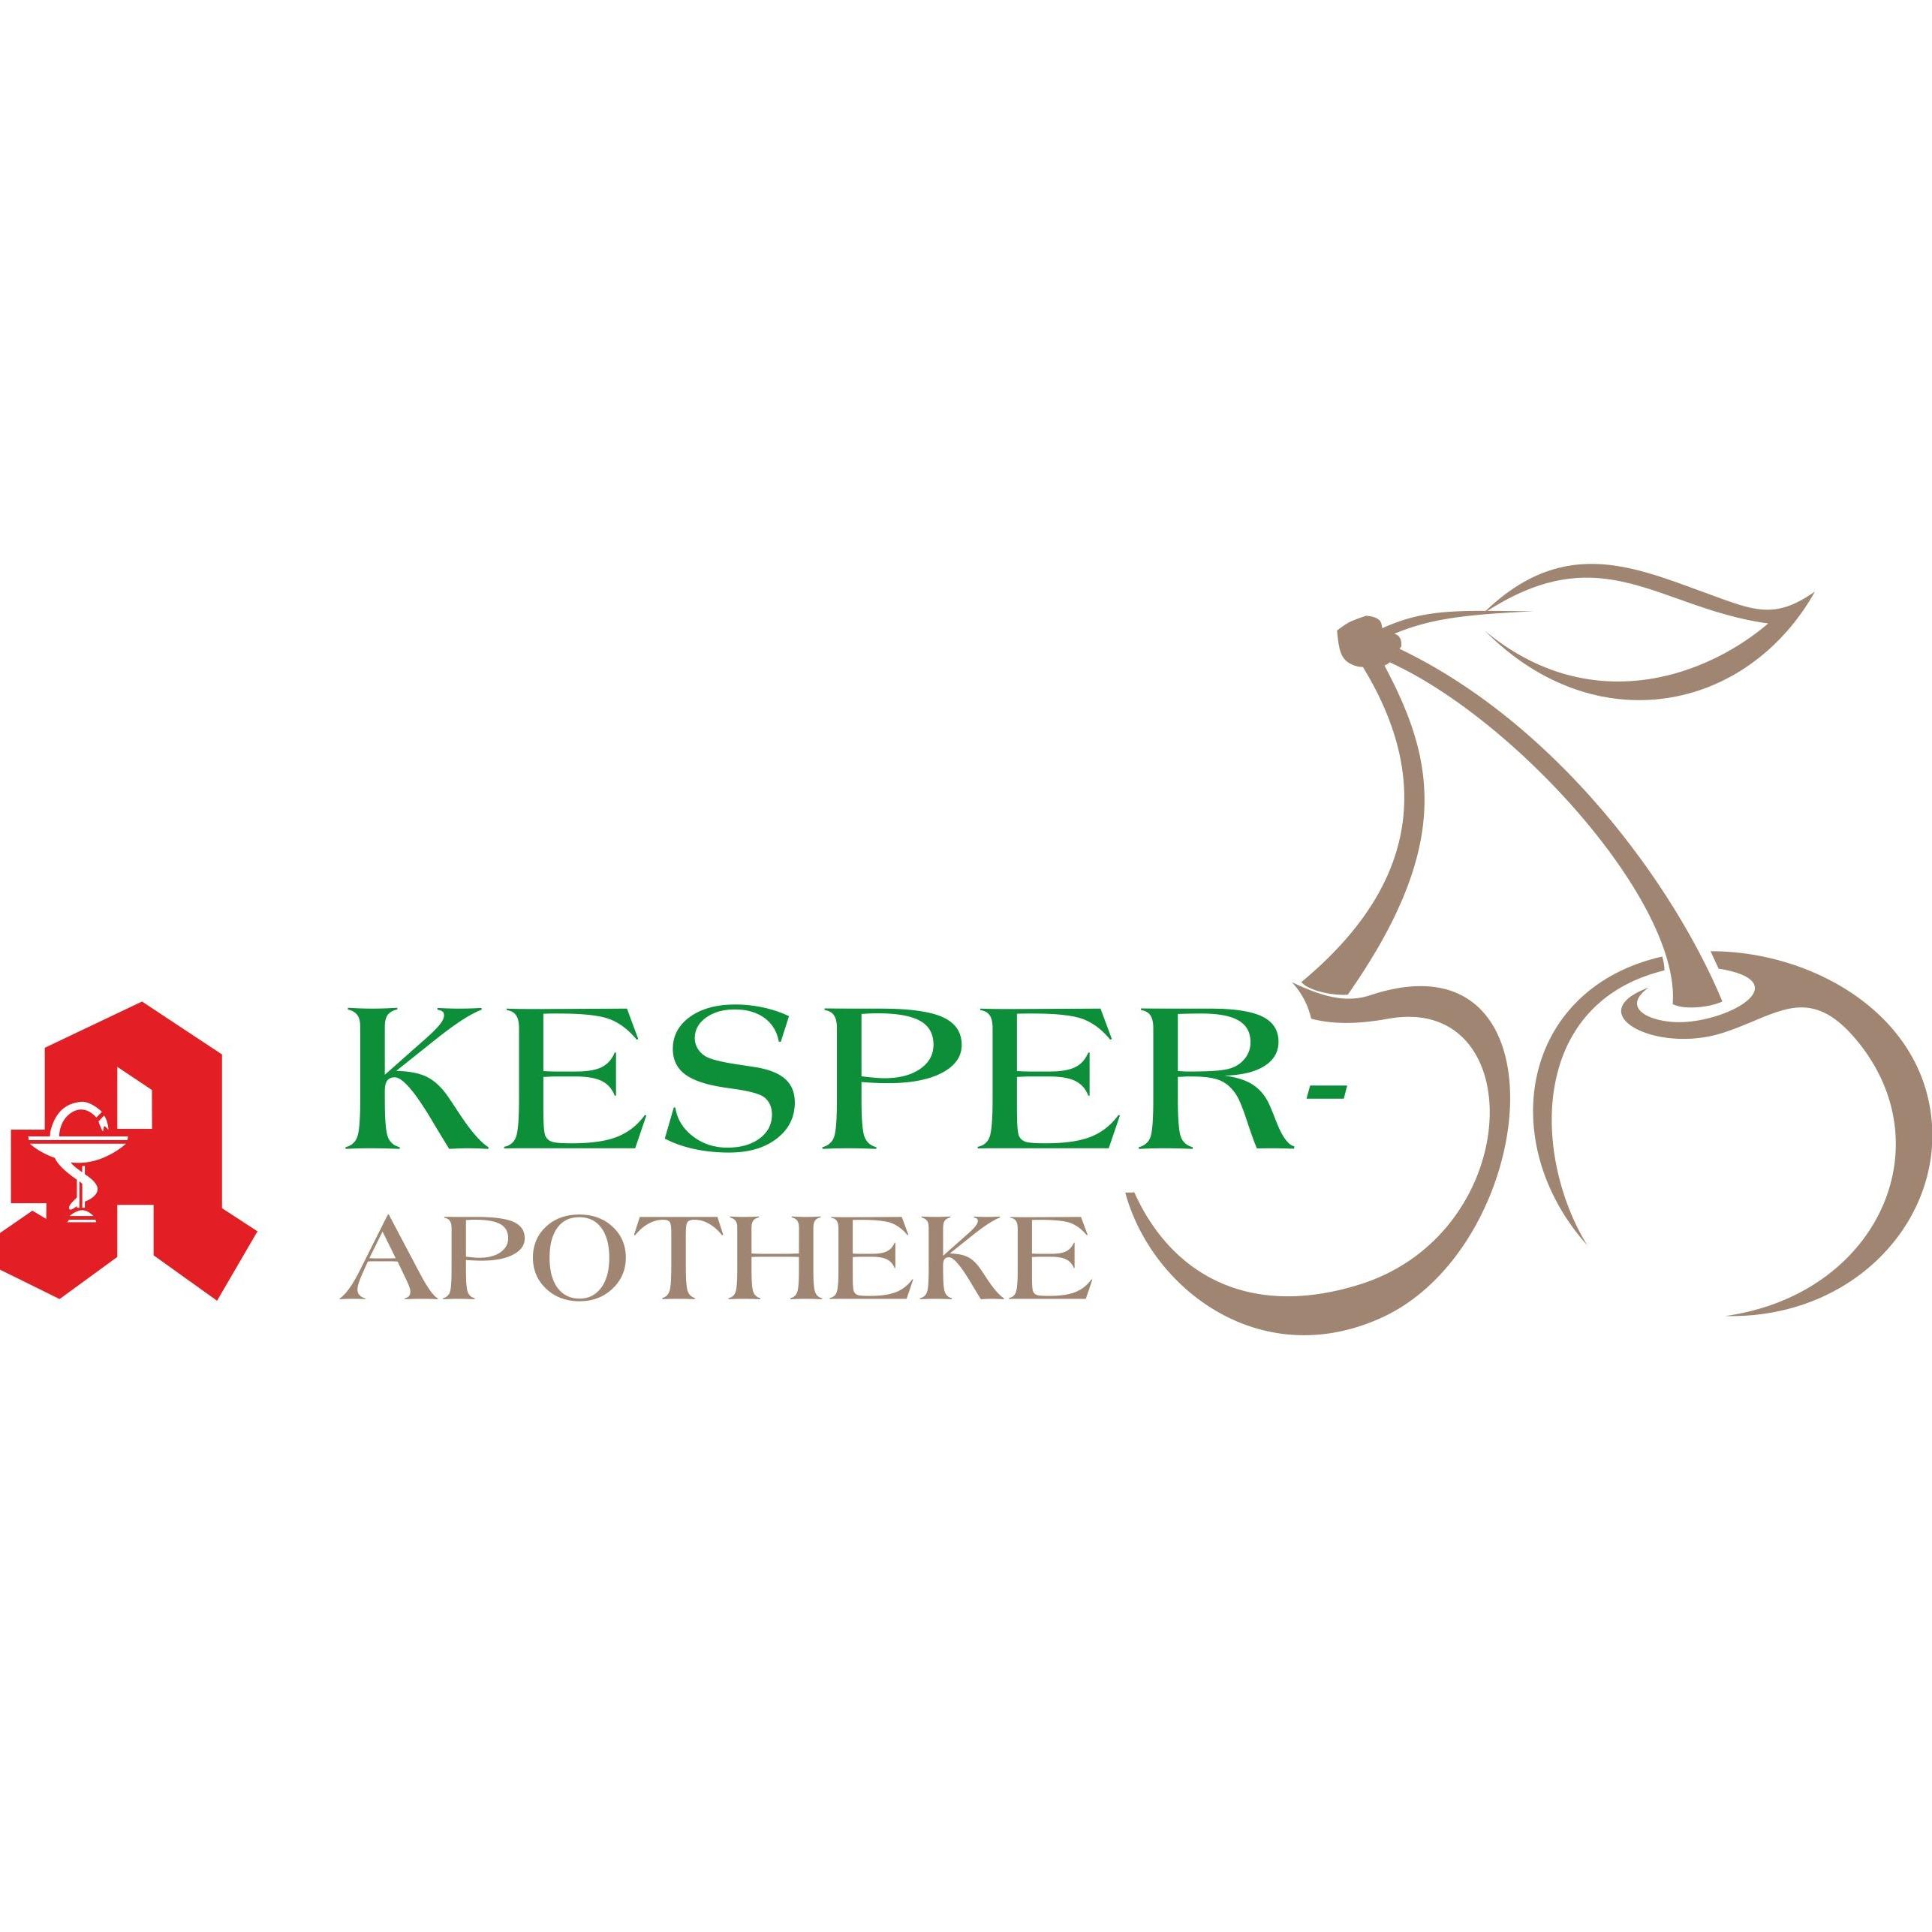 Kesper-Apotheke Inh. Andreas Illing e.K. in Witzenhausen - Logo